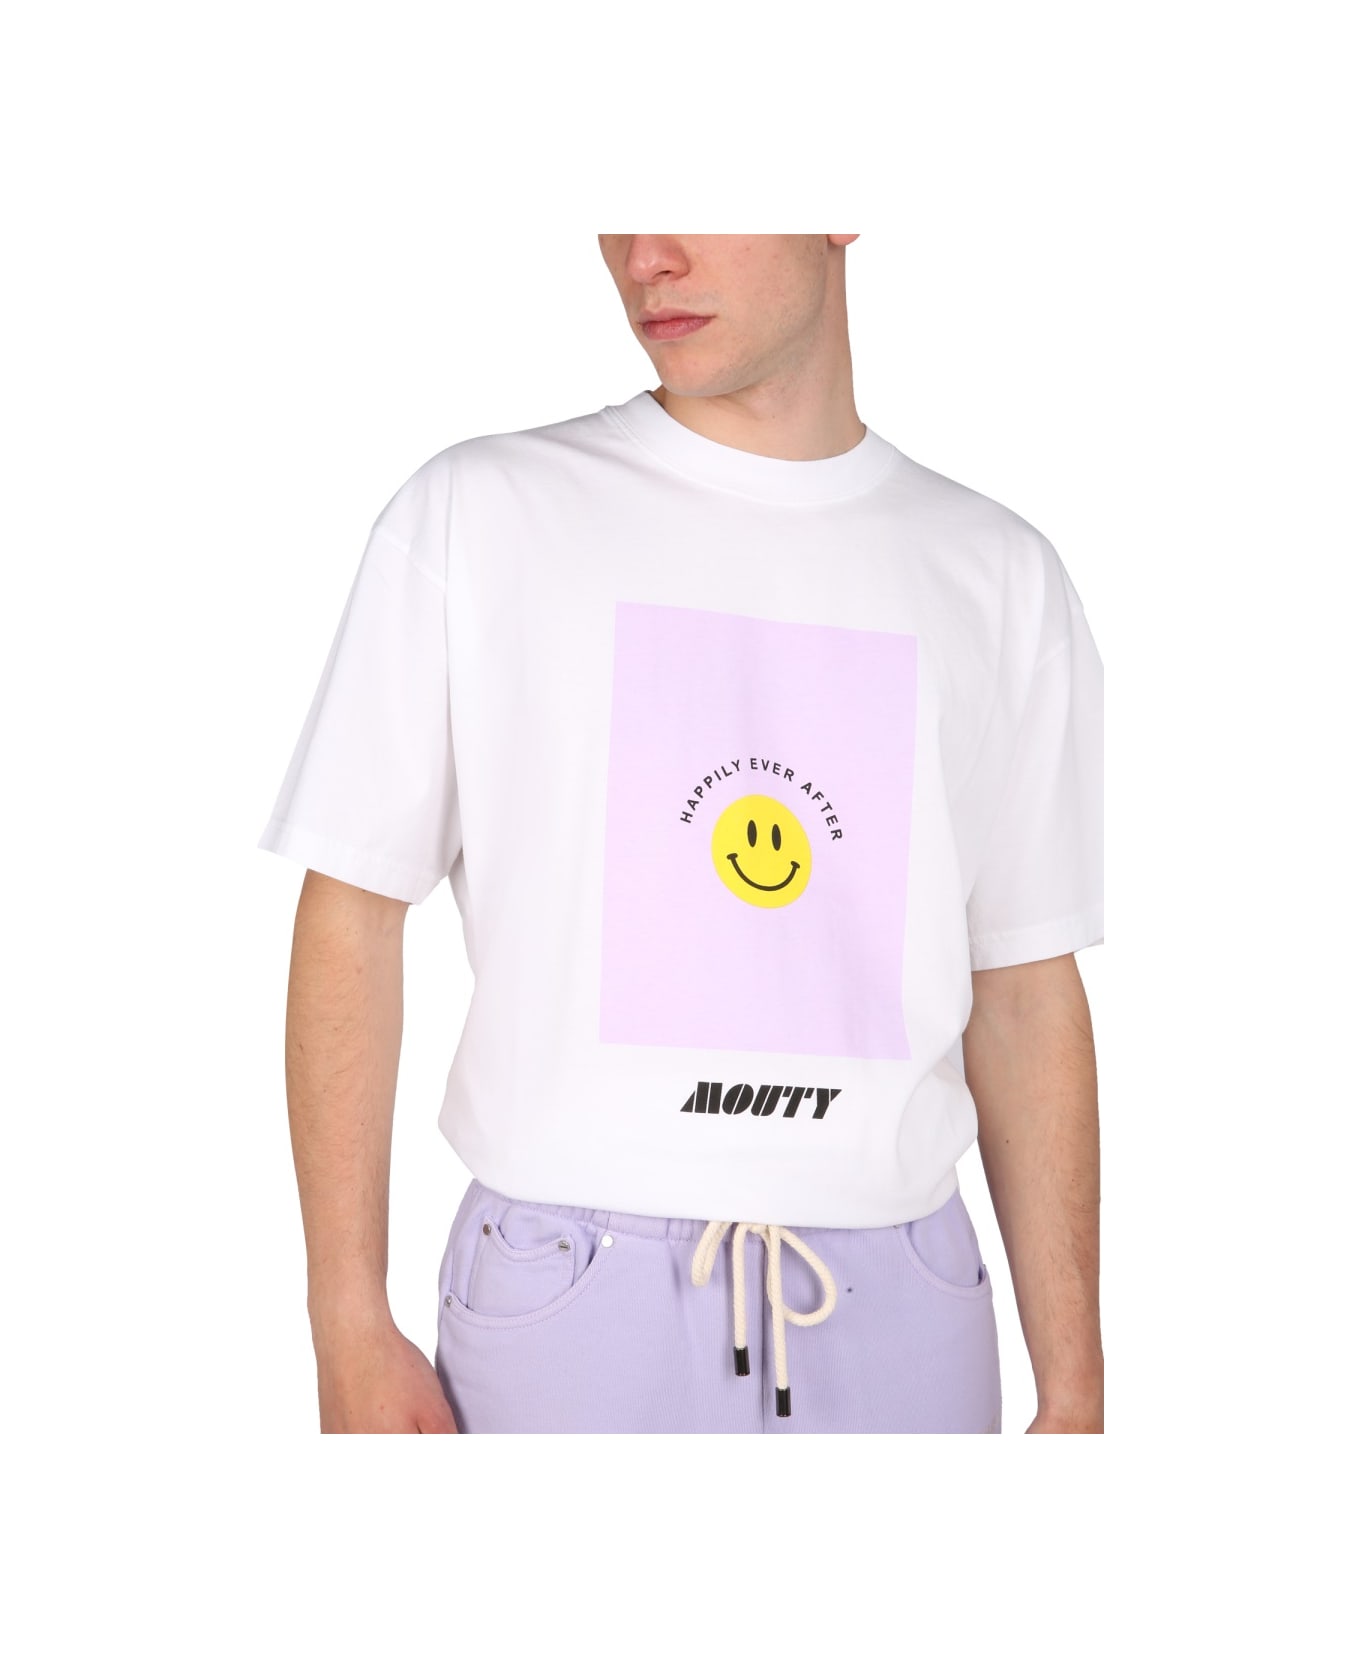 Mouty "smiley" T-shirt - WHITE